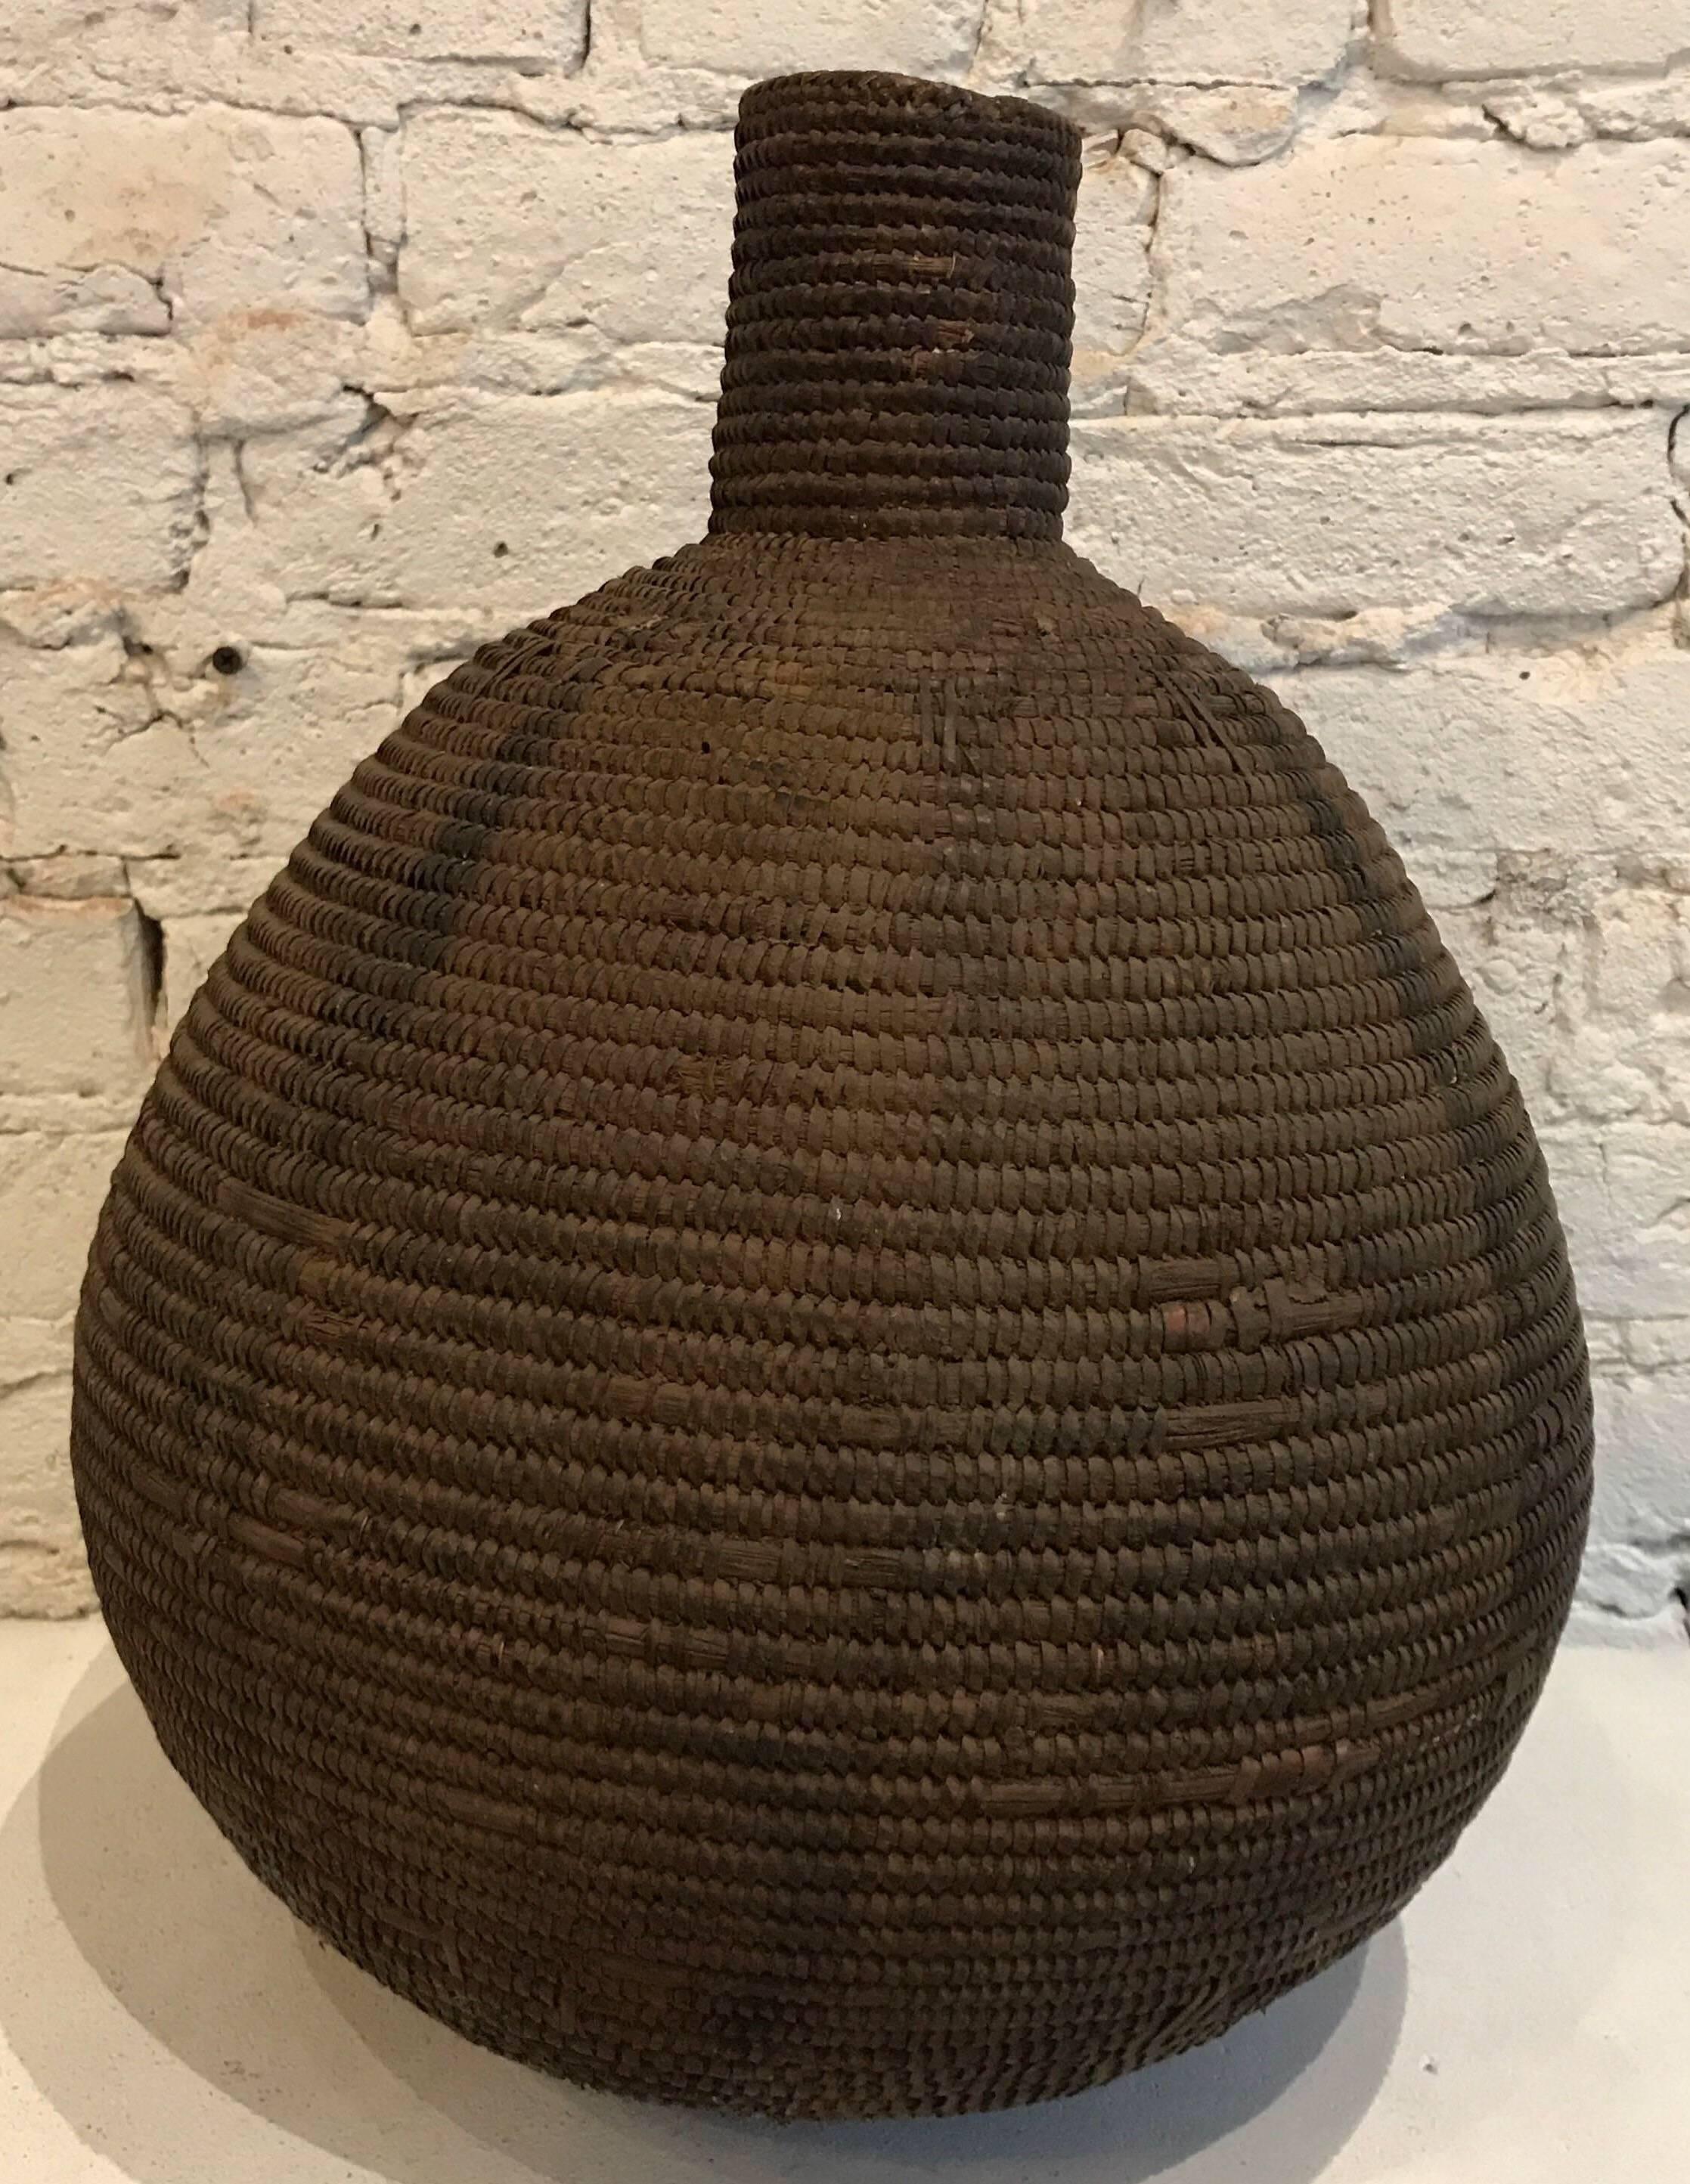 Malian Early 20th Century Woven Straw/Mud Honey Basket